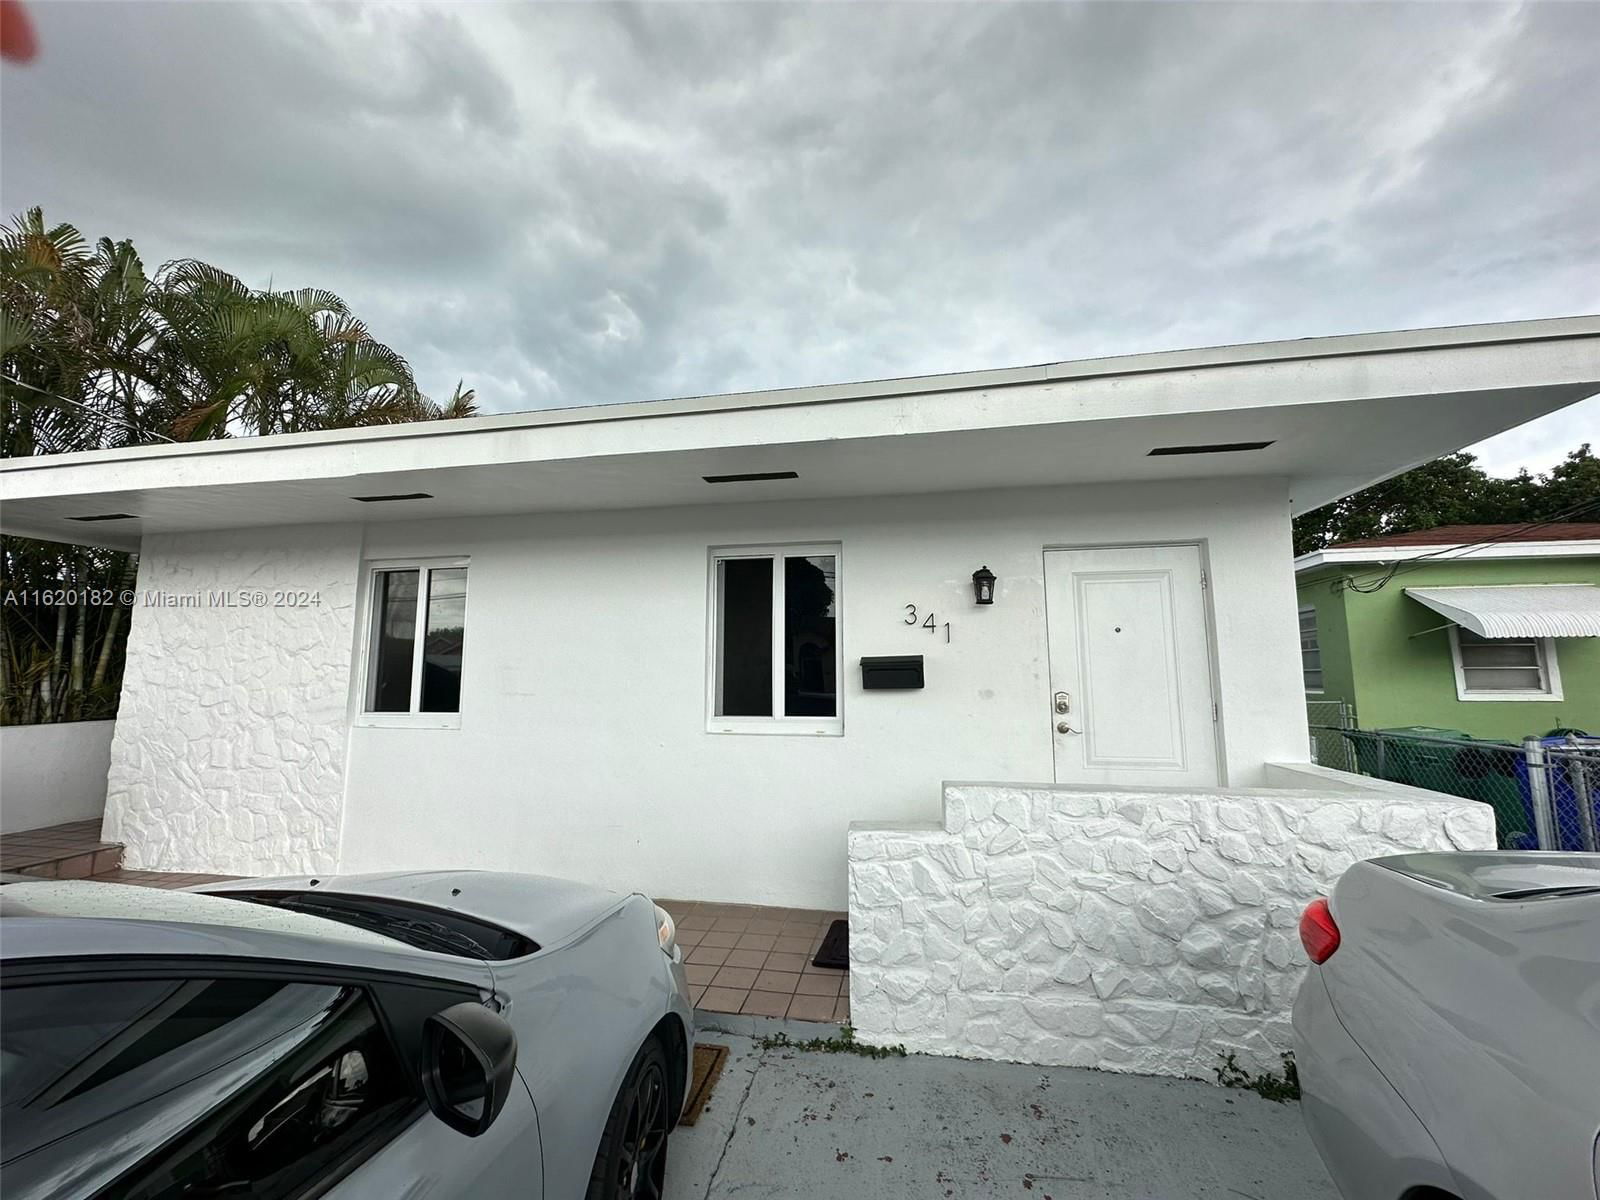 Real estate property located at 341 57th Ct, Miami-Dade County, W FLAGLER PK, Miami, FL